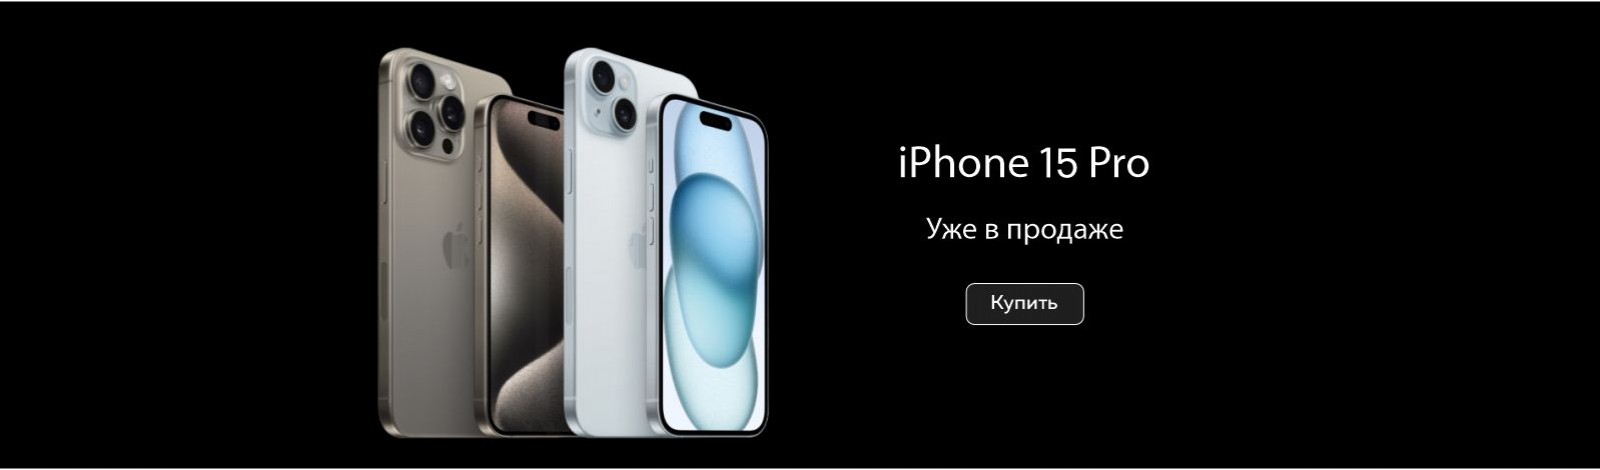 *iPhone 15 Pro